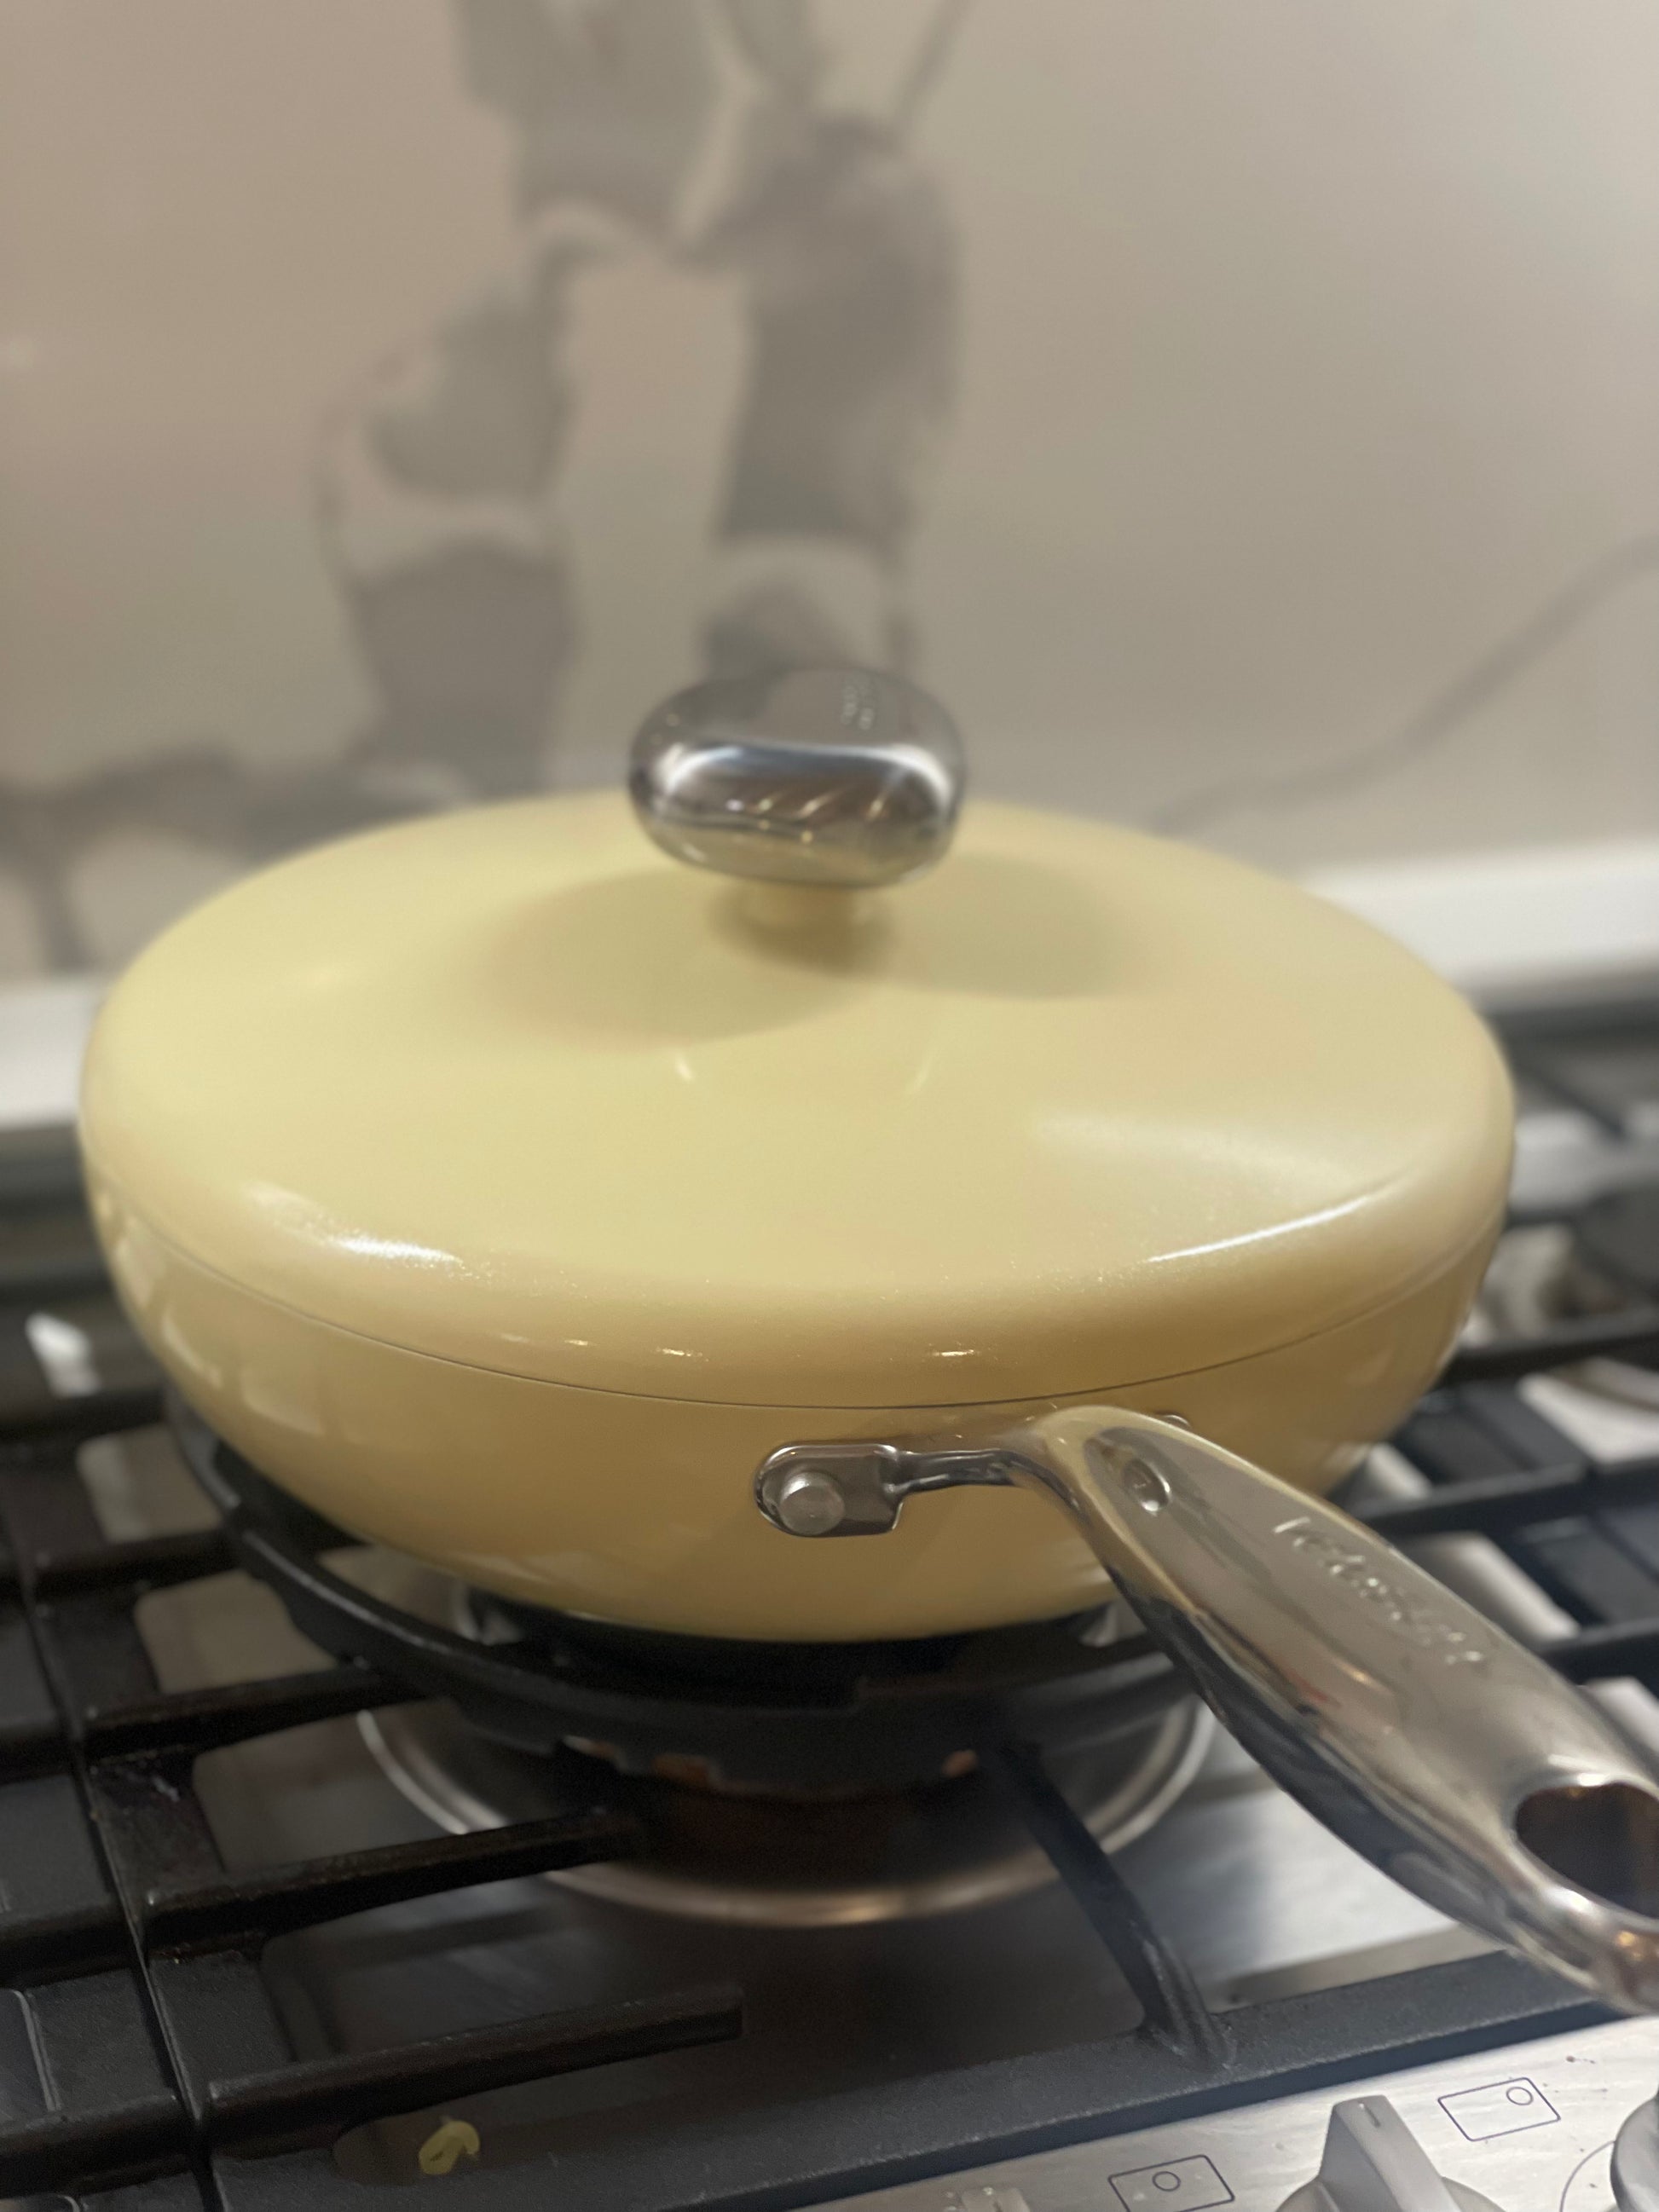 Velosan Pebble Series 8Pcs Ceramic Nonstick Cookware Set – VELOSAN